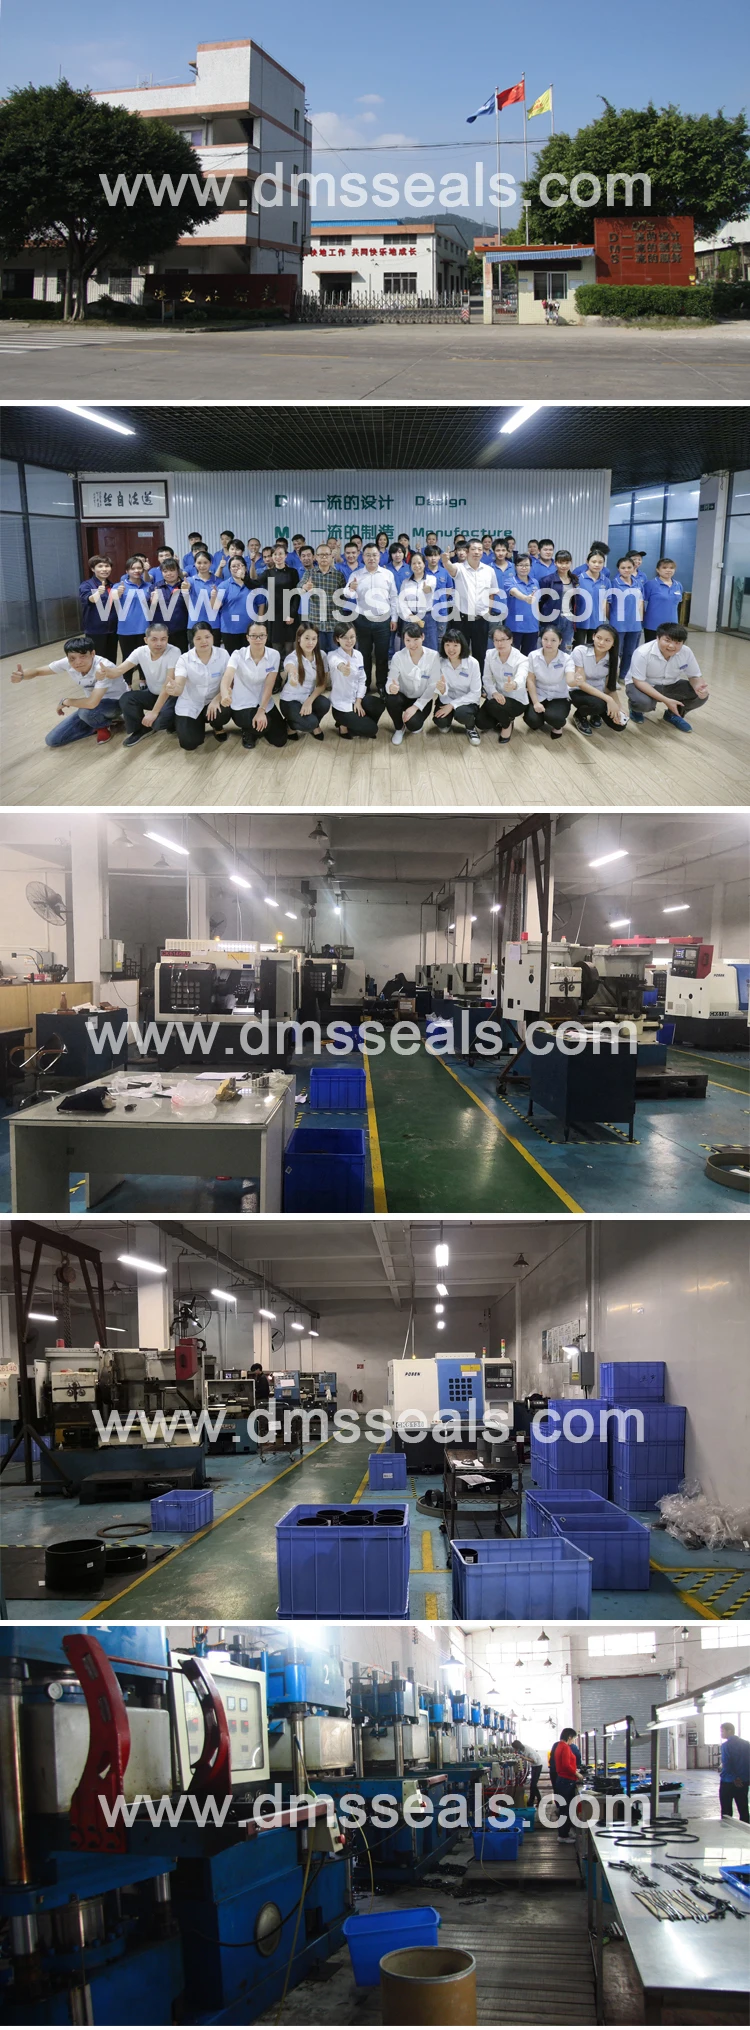 DMS Seals Professional door wiper seal company for metallurgical equipment